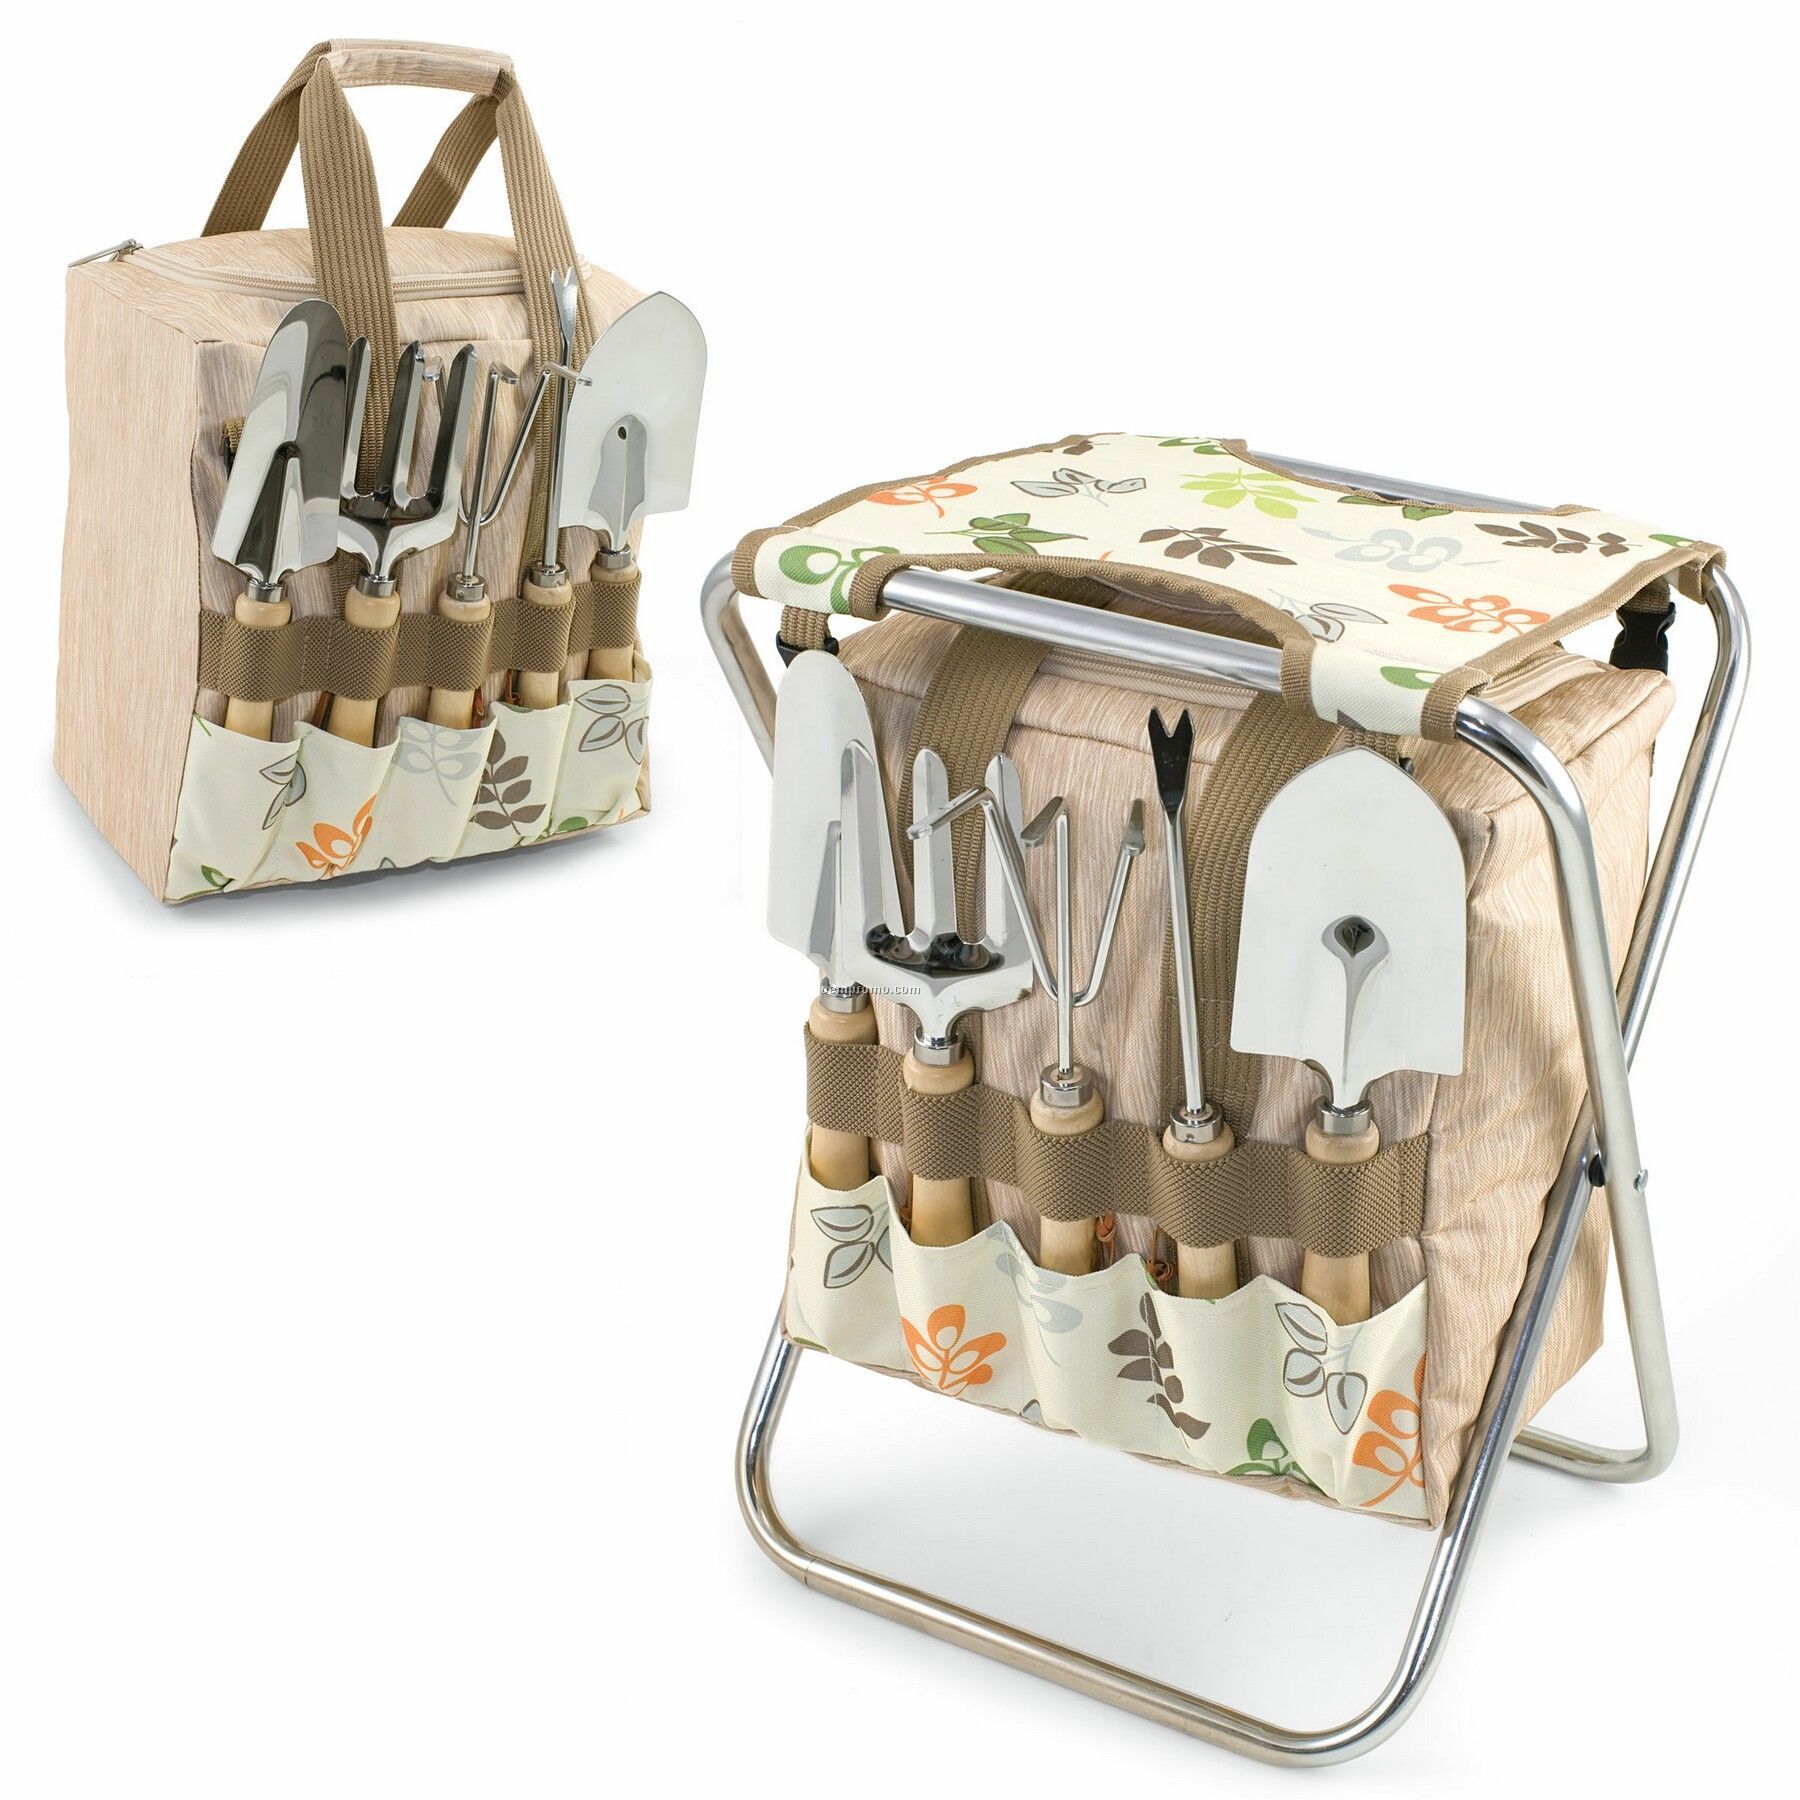 Gardener Botanica Folding Seat W/ Tools & Detachable Tote Bag